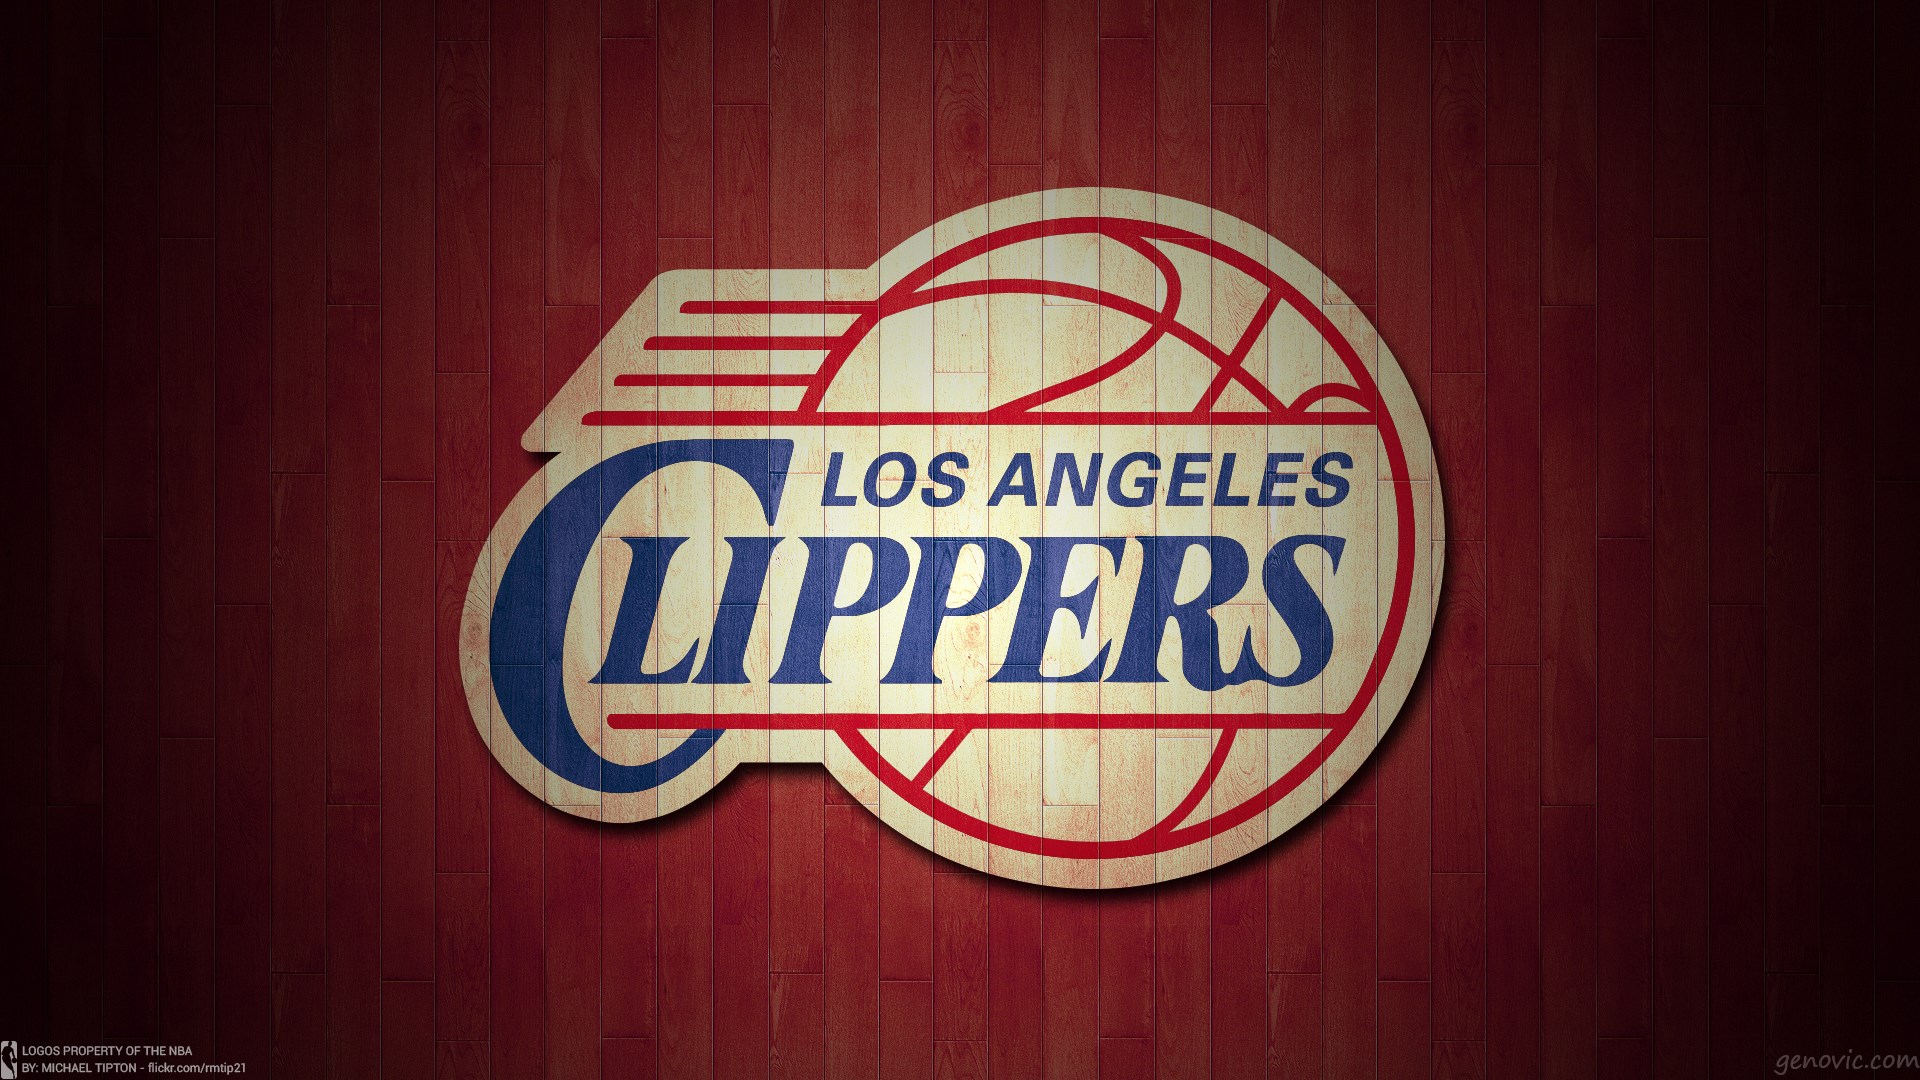 LOS ANGELES CLIPPERS Basketball Nba logo wallpaper Wallpapers HD